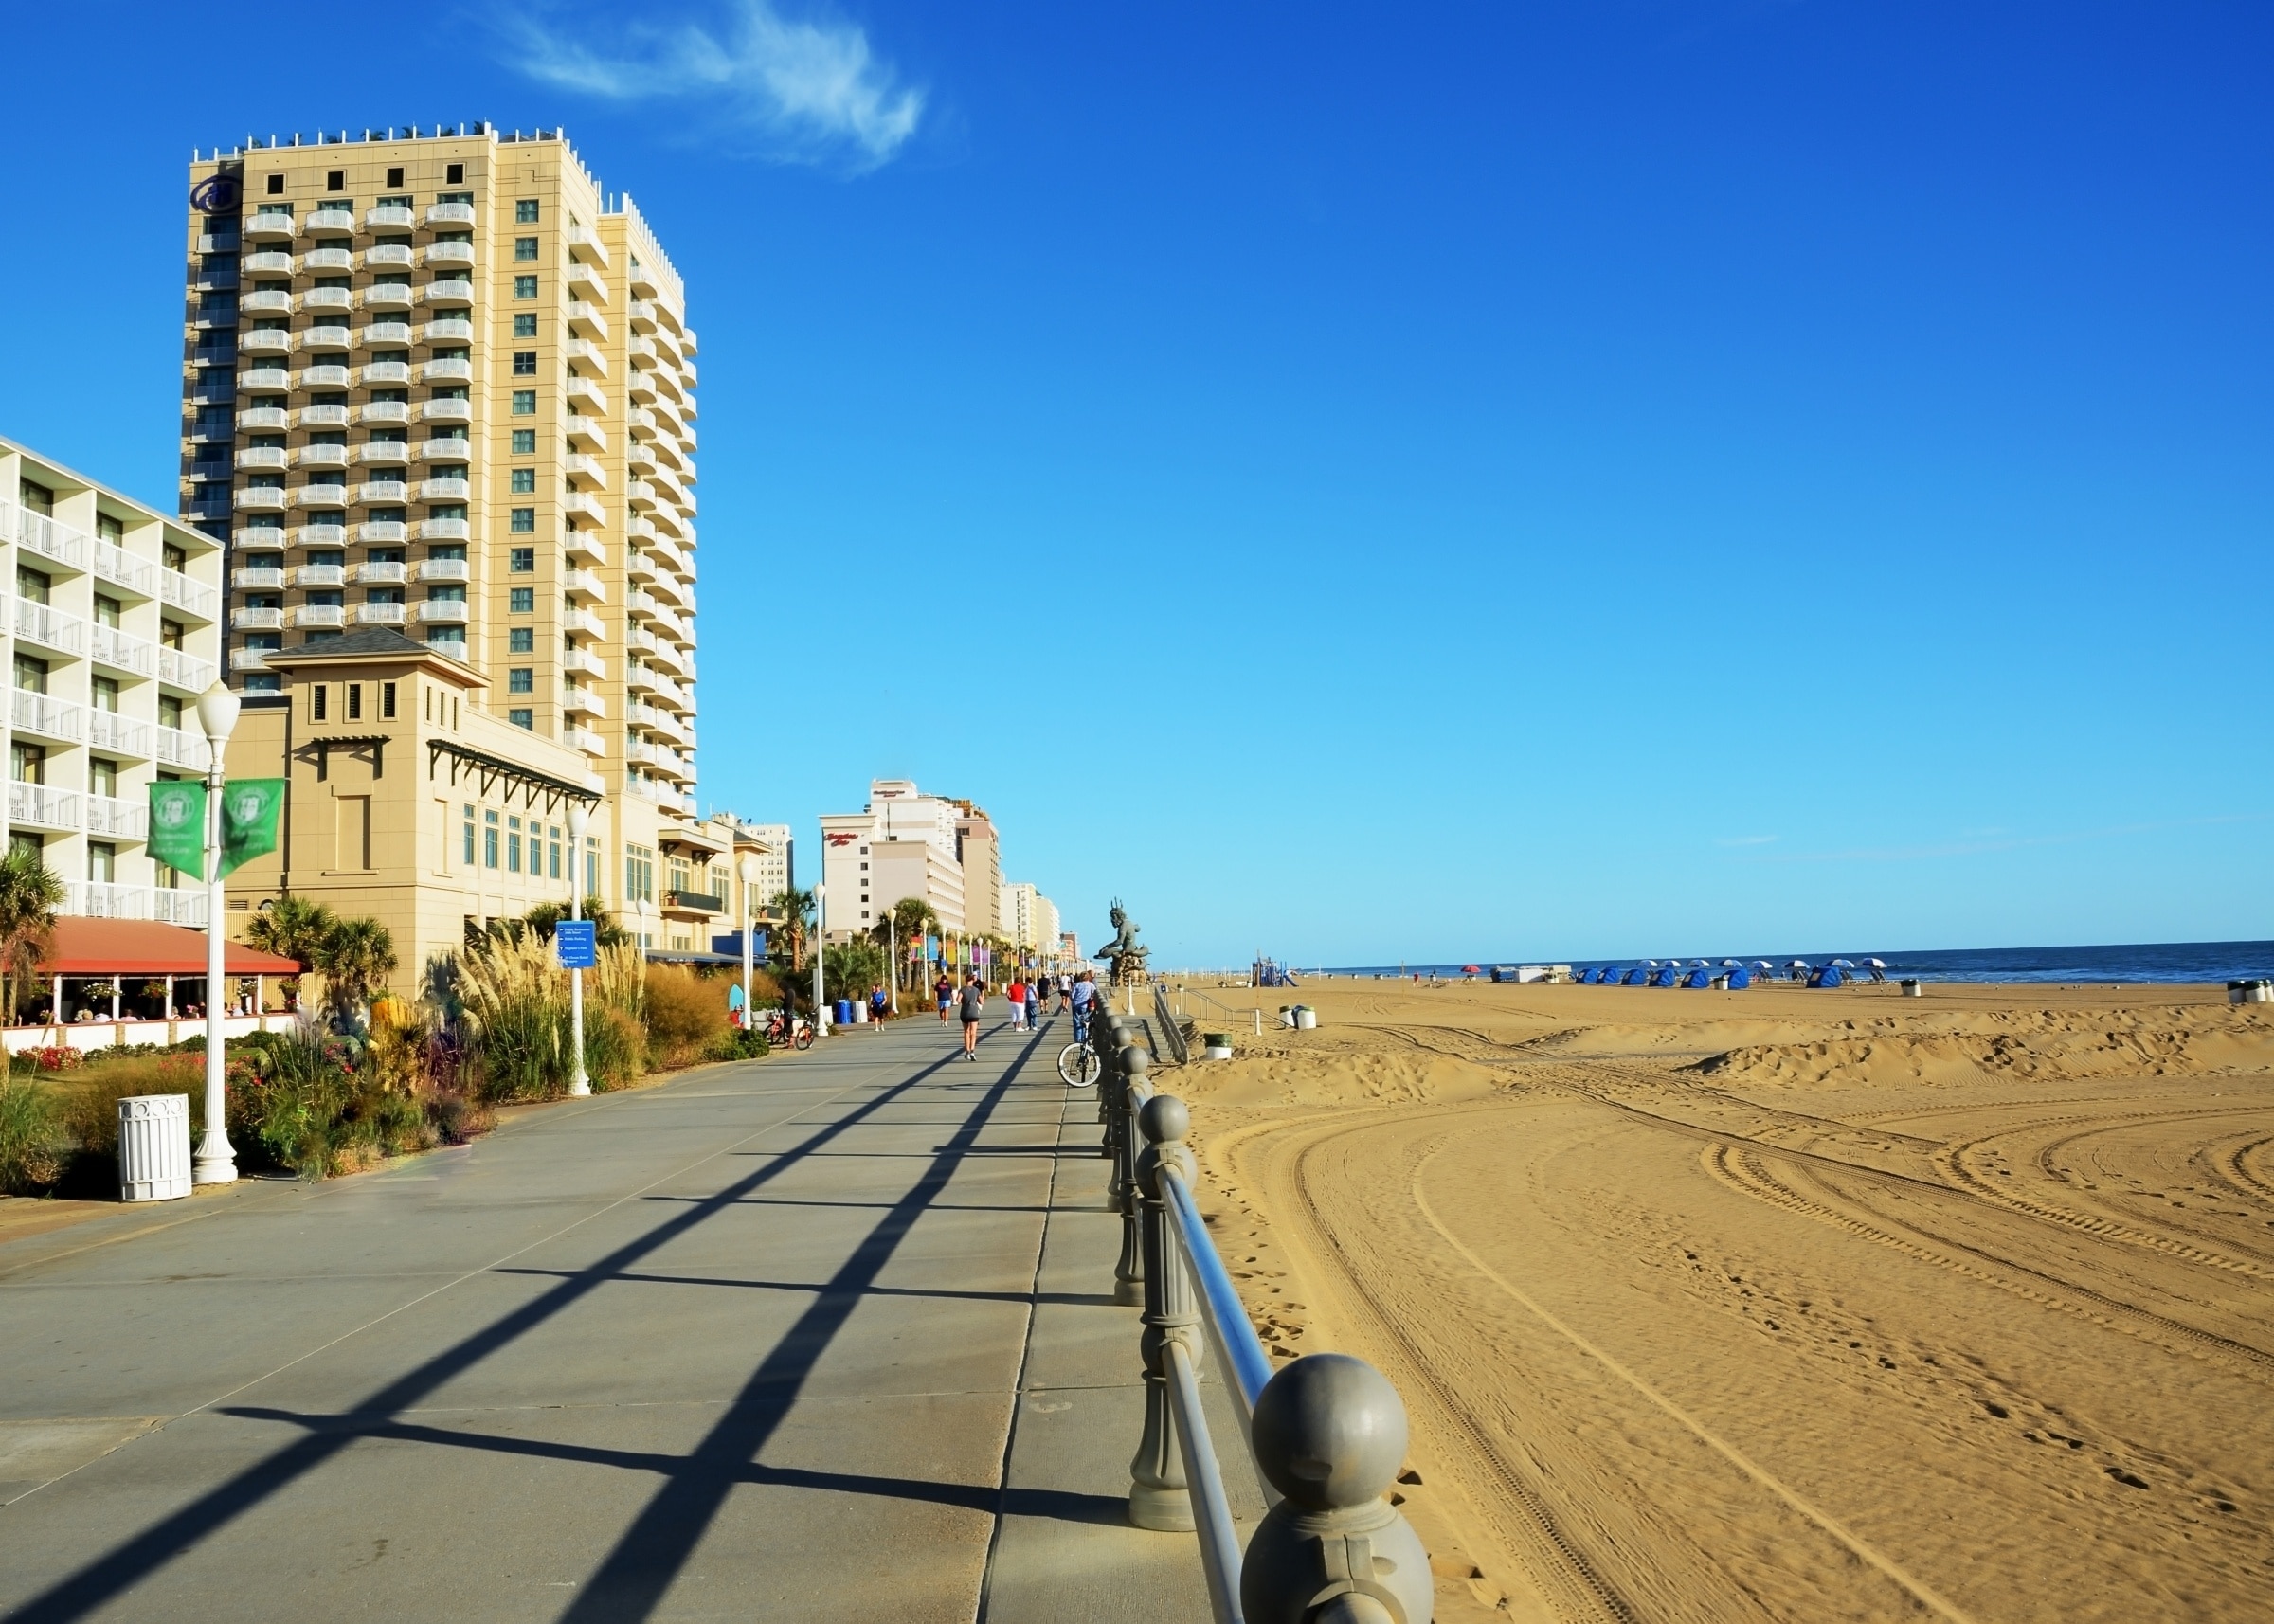 Find Cheap Hotels near Virginia Beach Boardwalk Hotwire